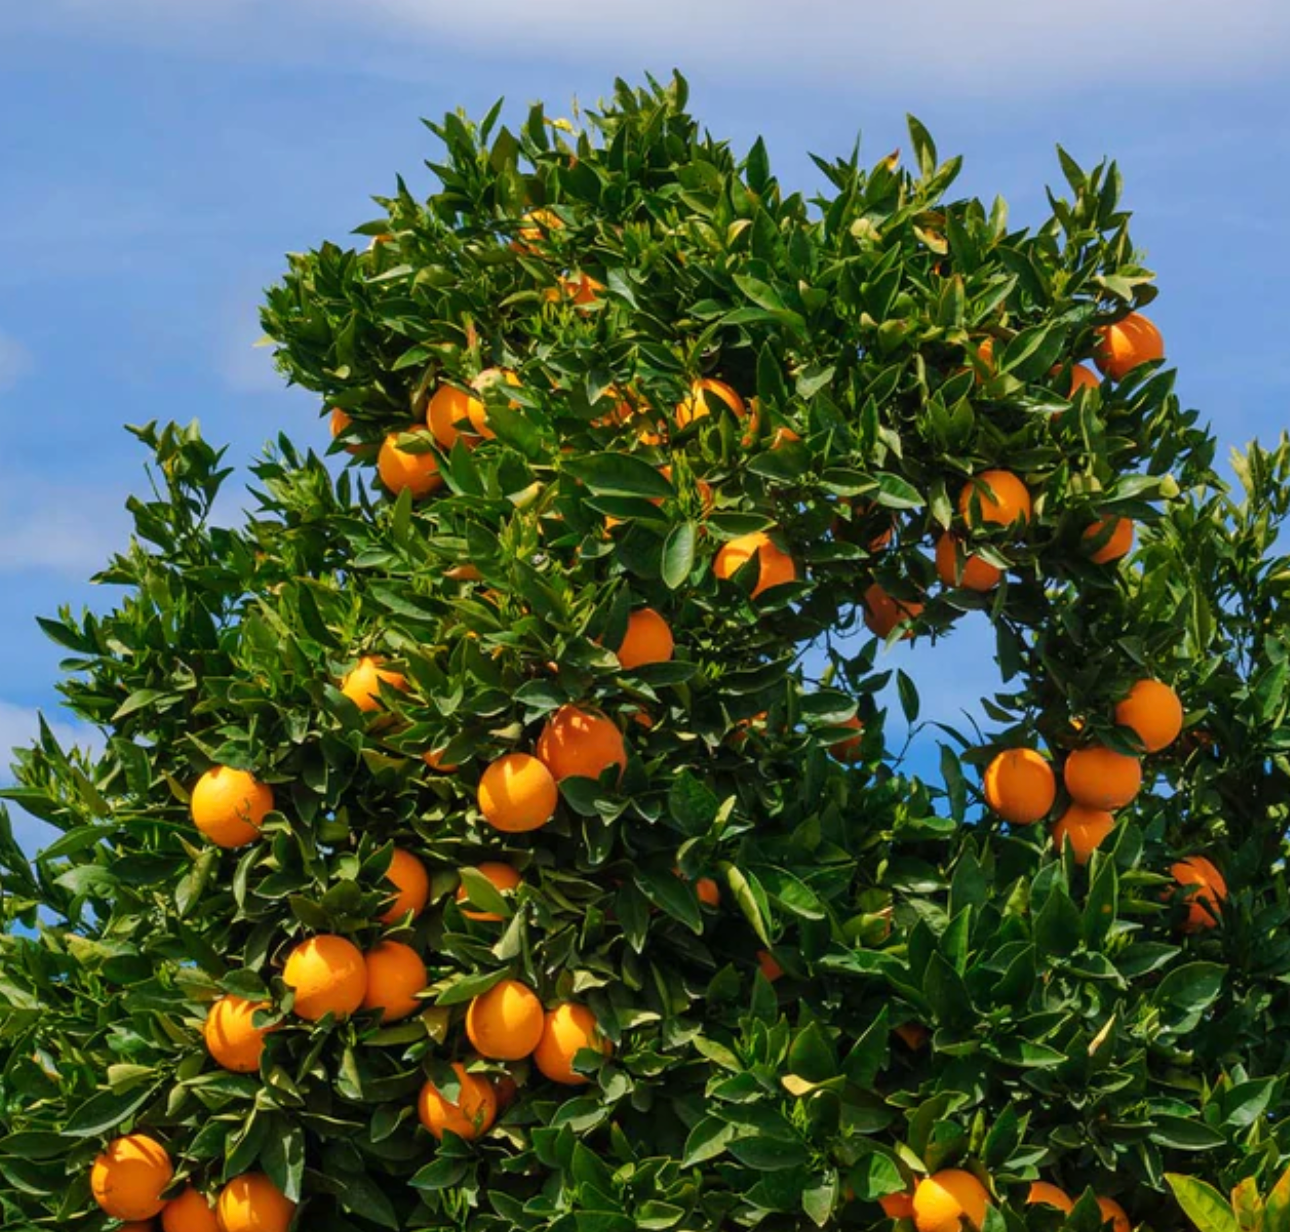 Cara Cara Orange tree full of ripe oranges under a clear blue sky.